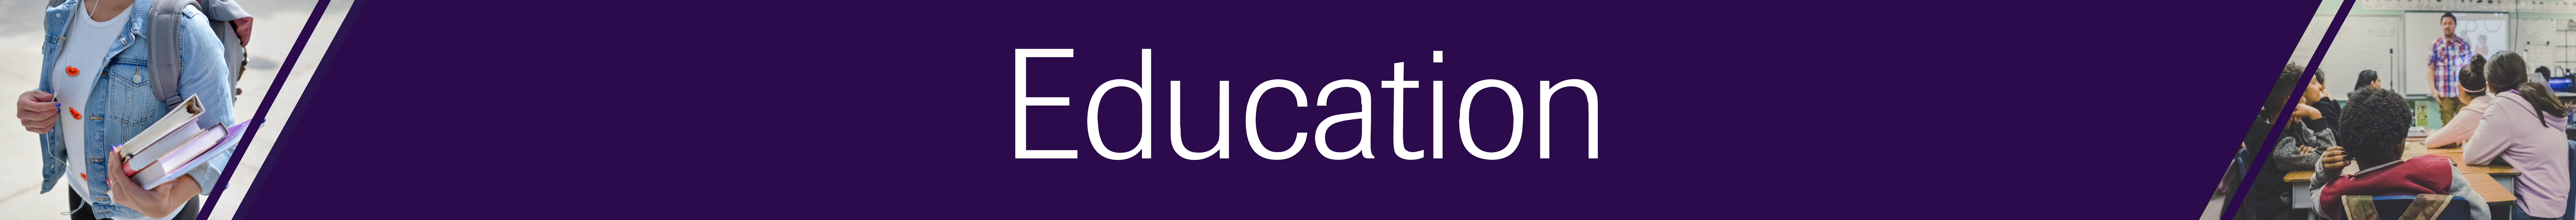 Education web banner